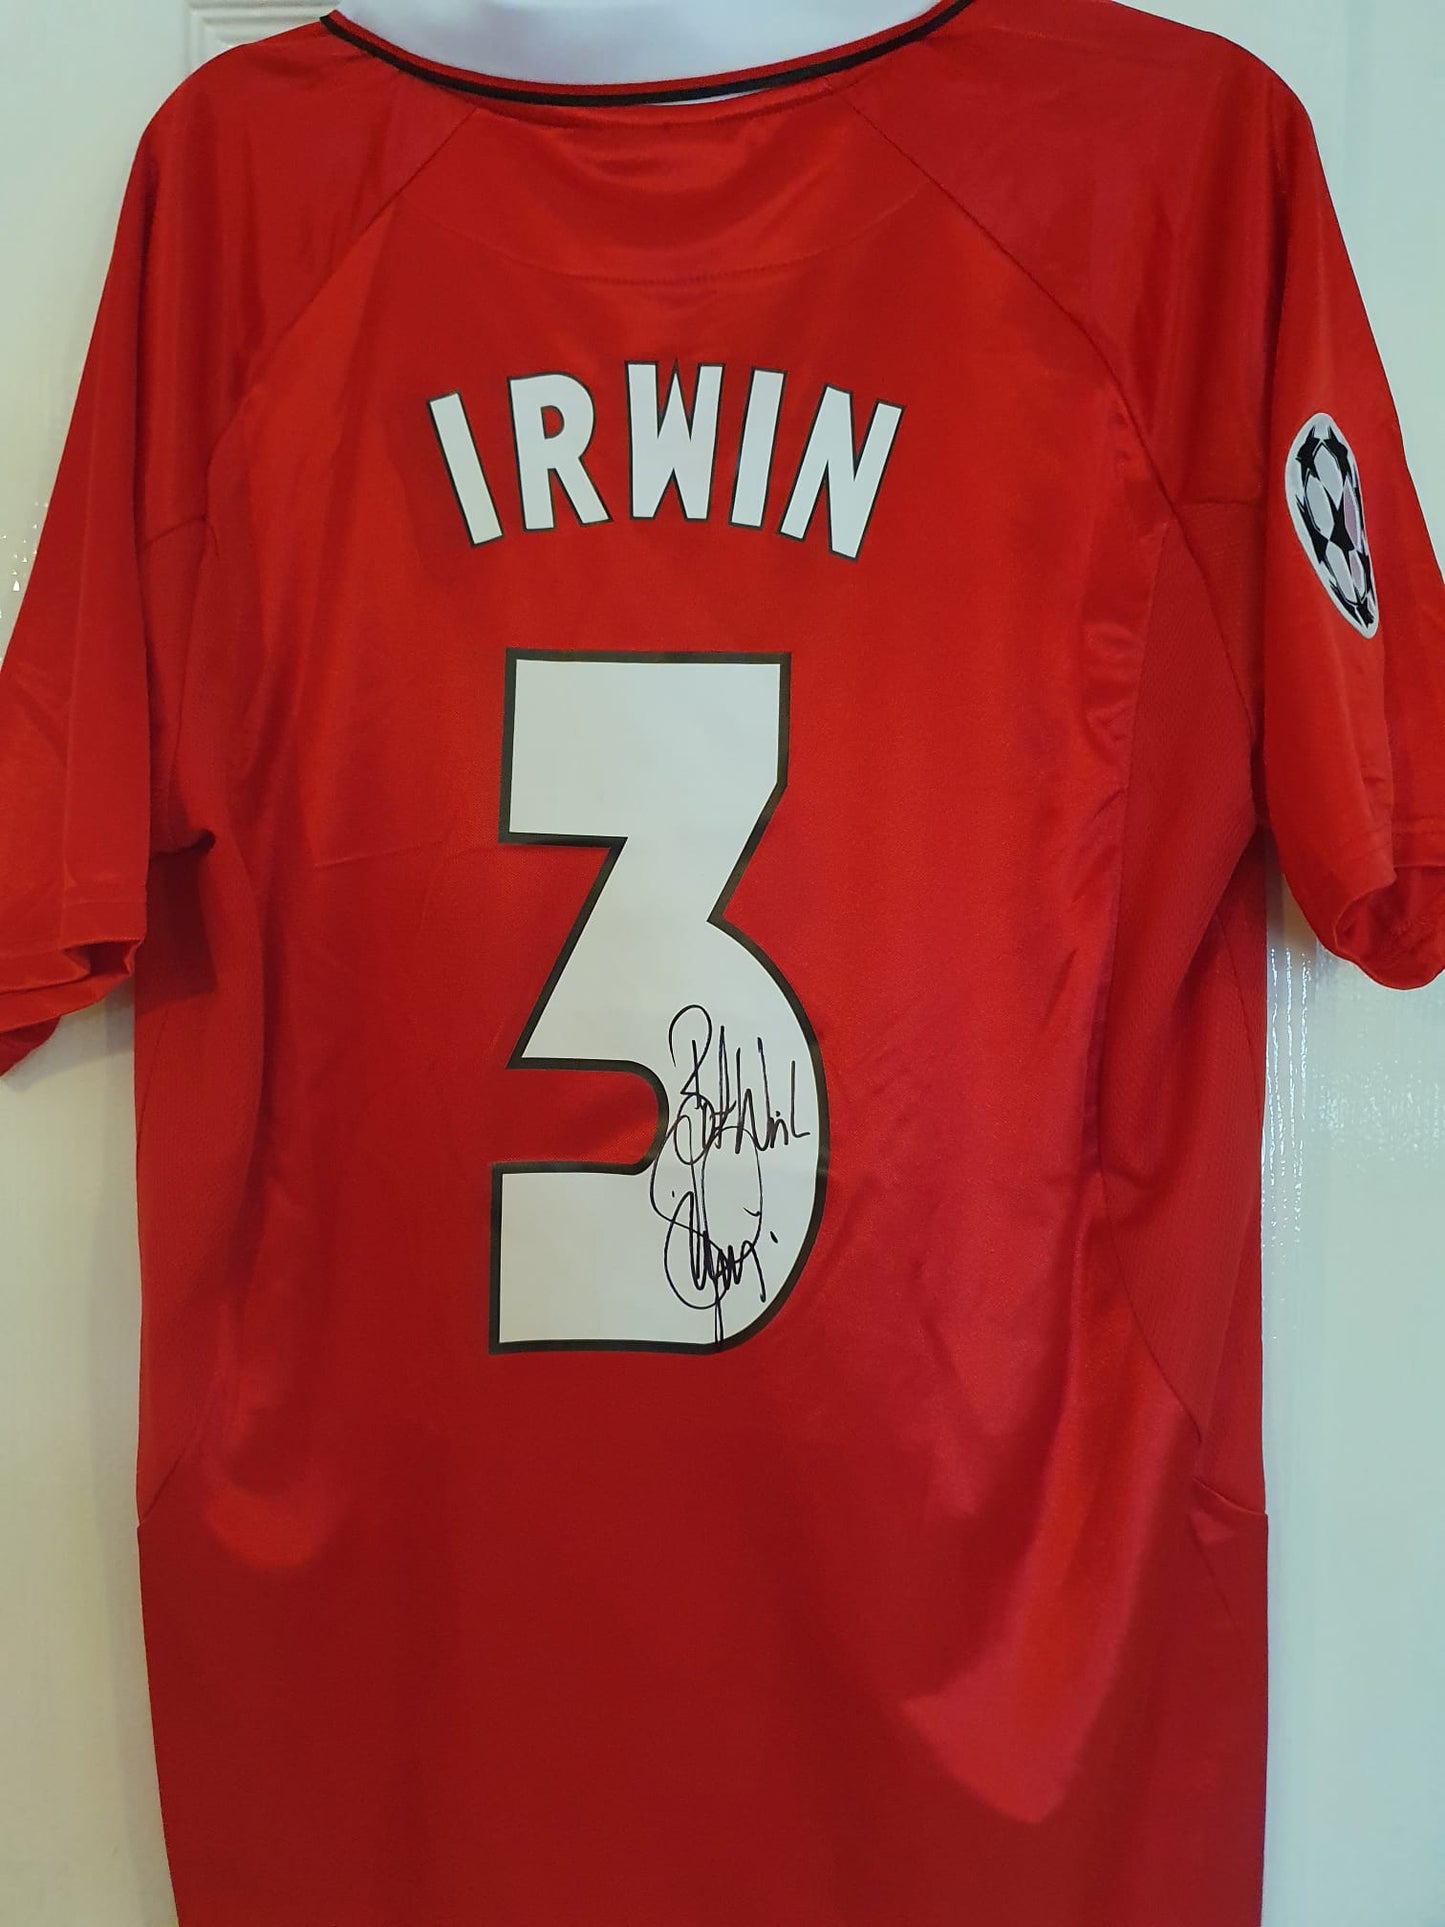 Dennis Irwin signed Manchester United shirt